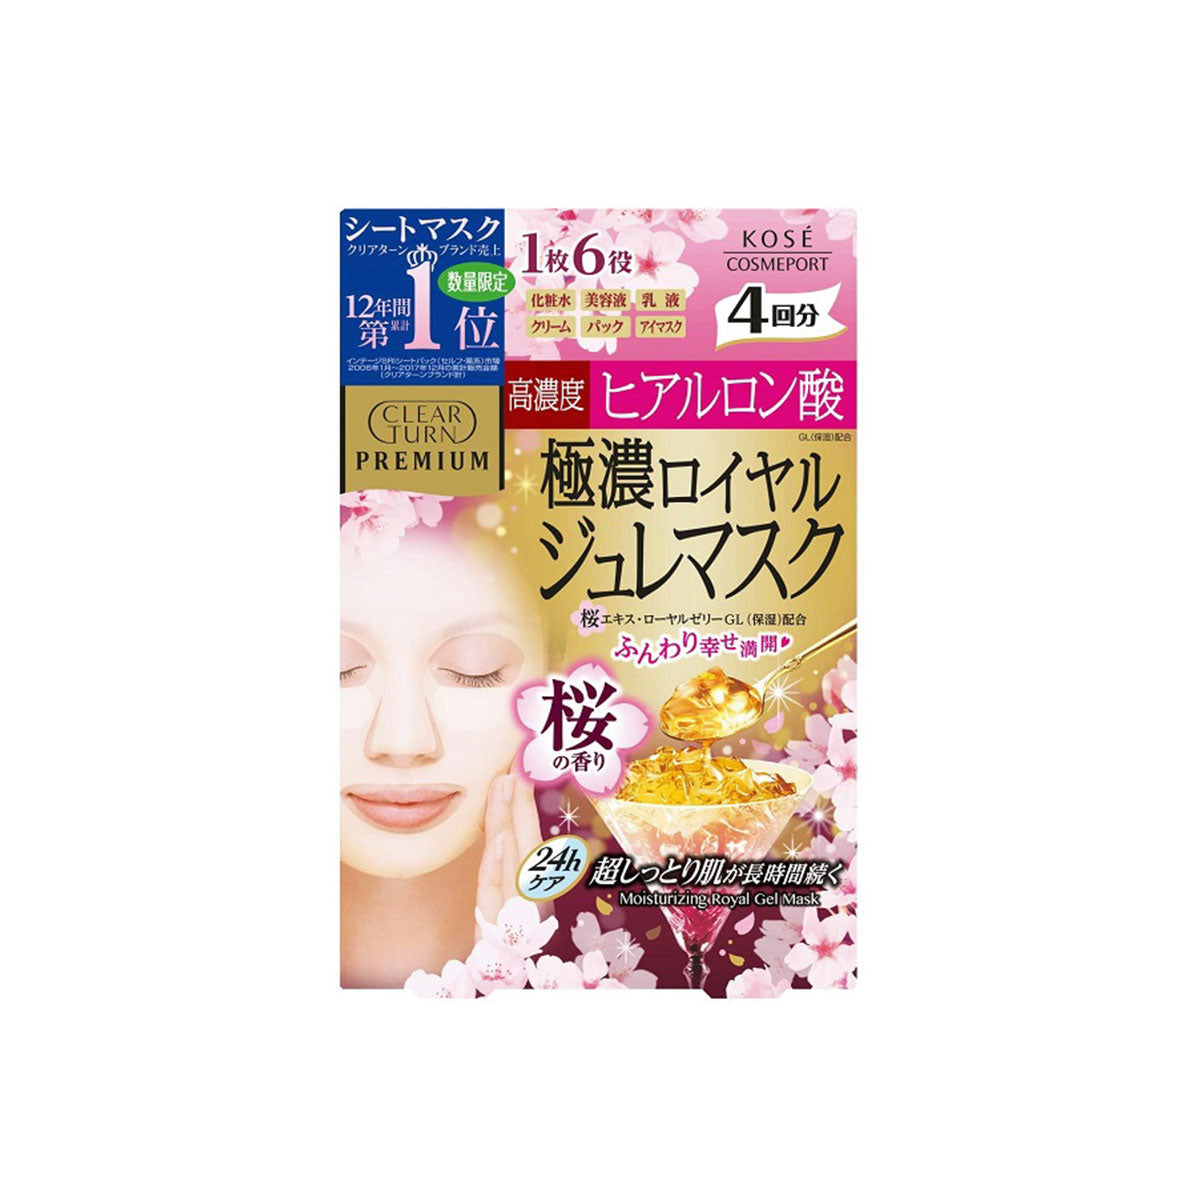 Clear Turn Premium Royal Jelly Mask Hyaluronic Acid #Sakura 4pcs